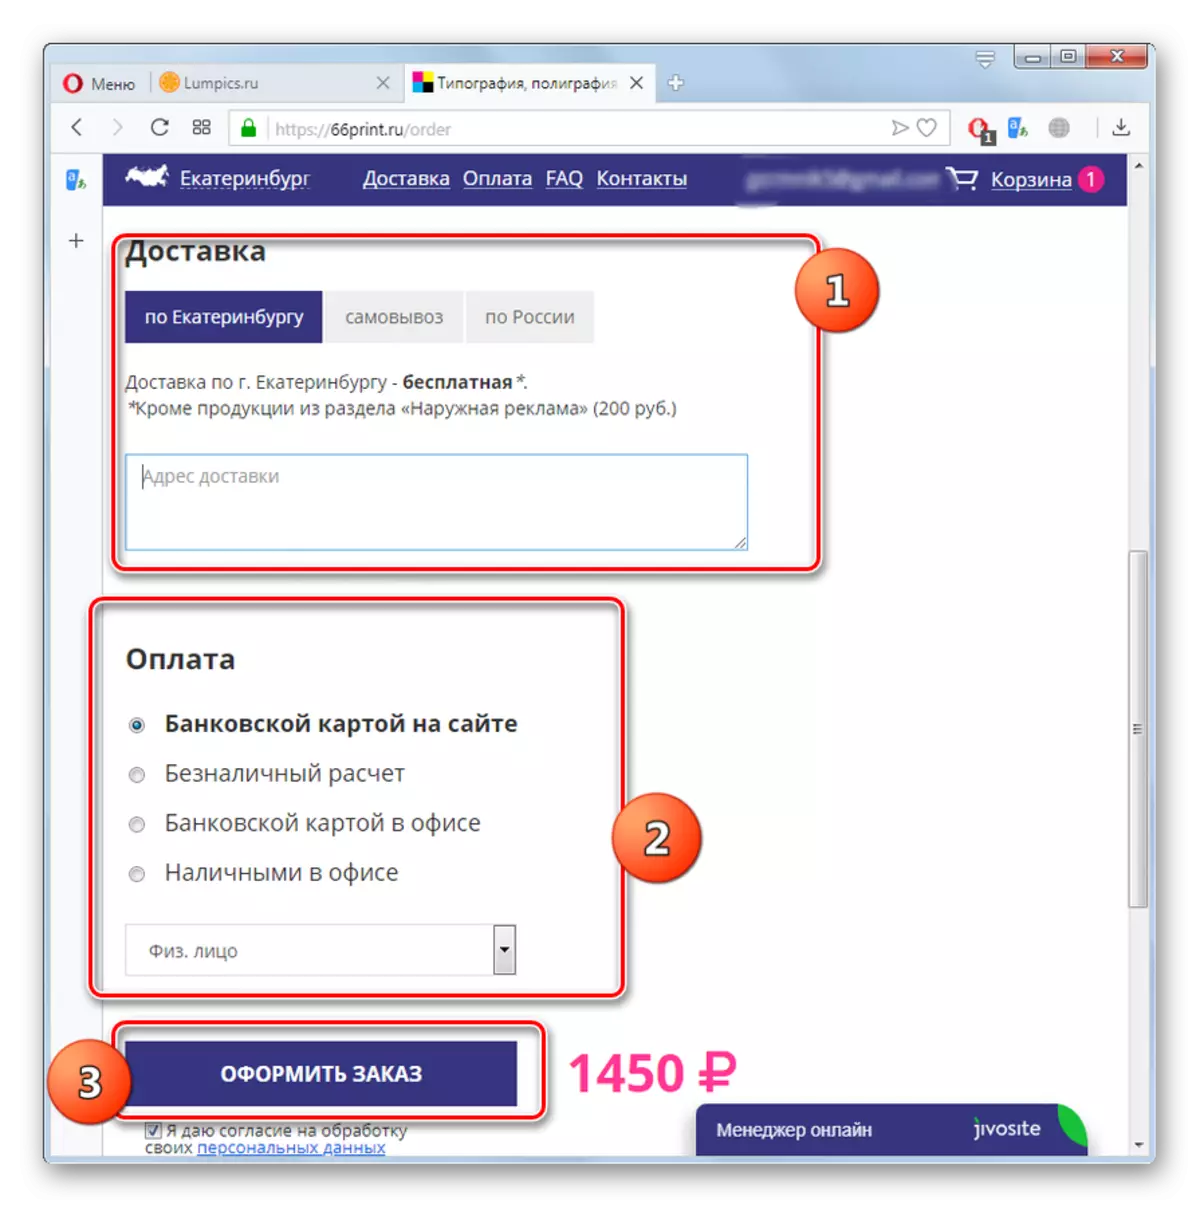 Operaブラウザのオンラインサービス66print.ruの注文